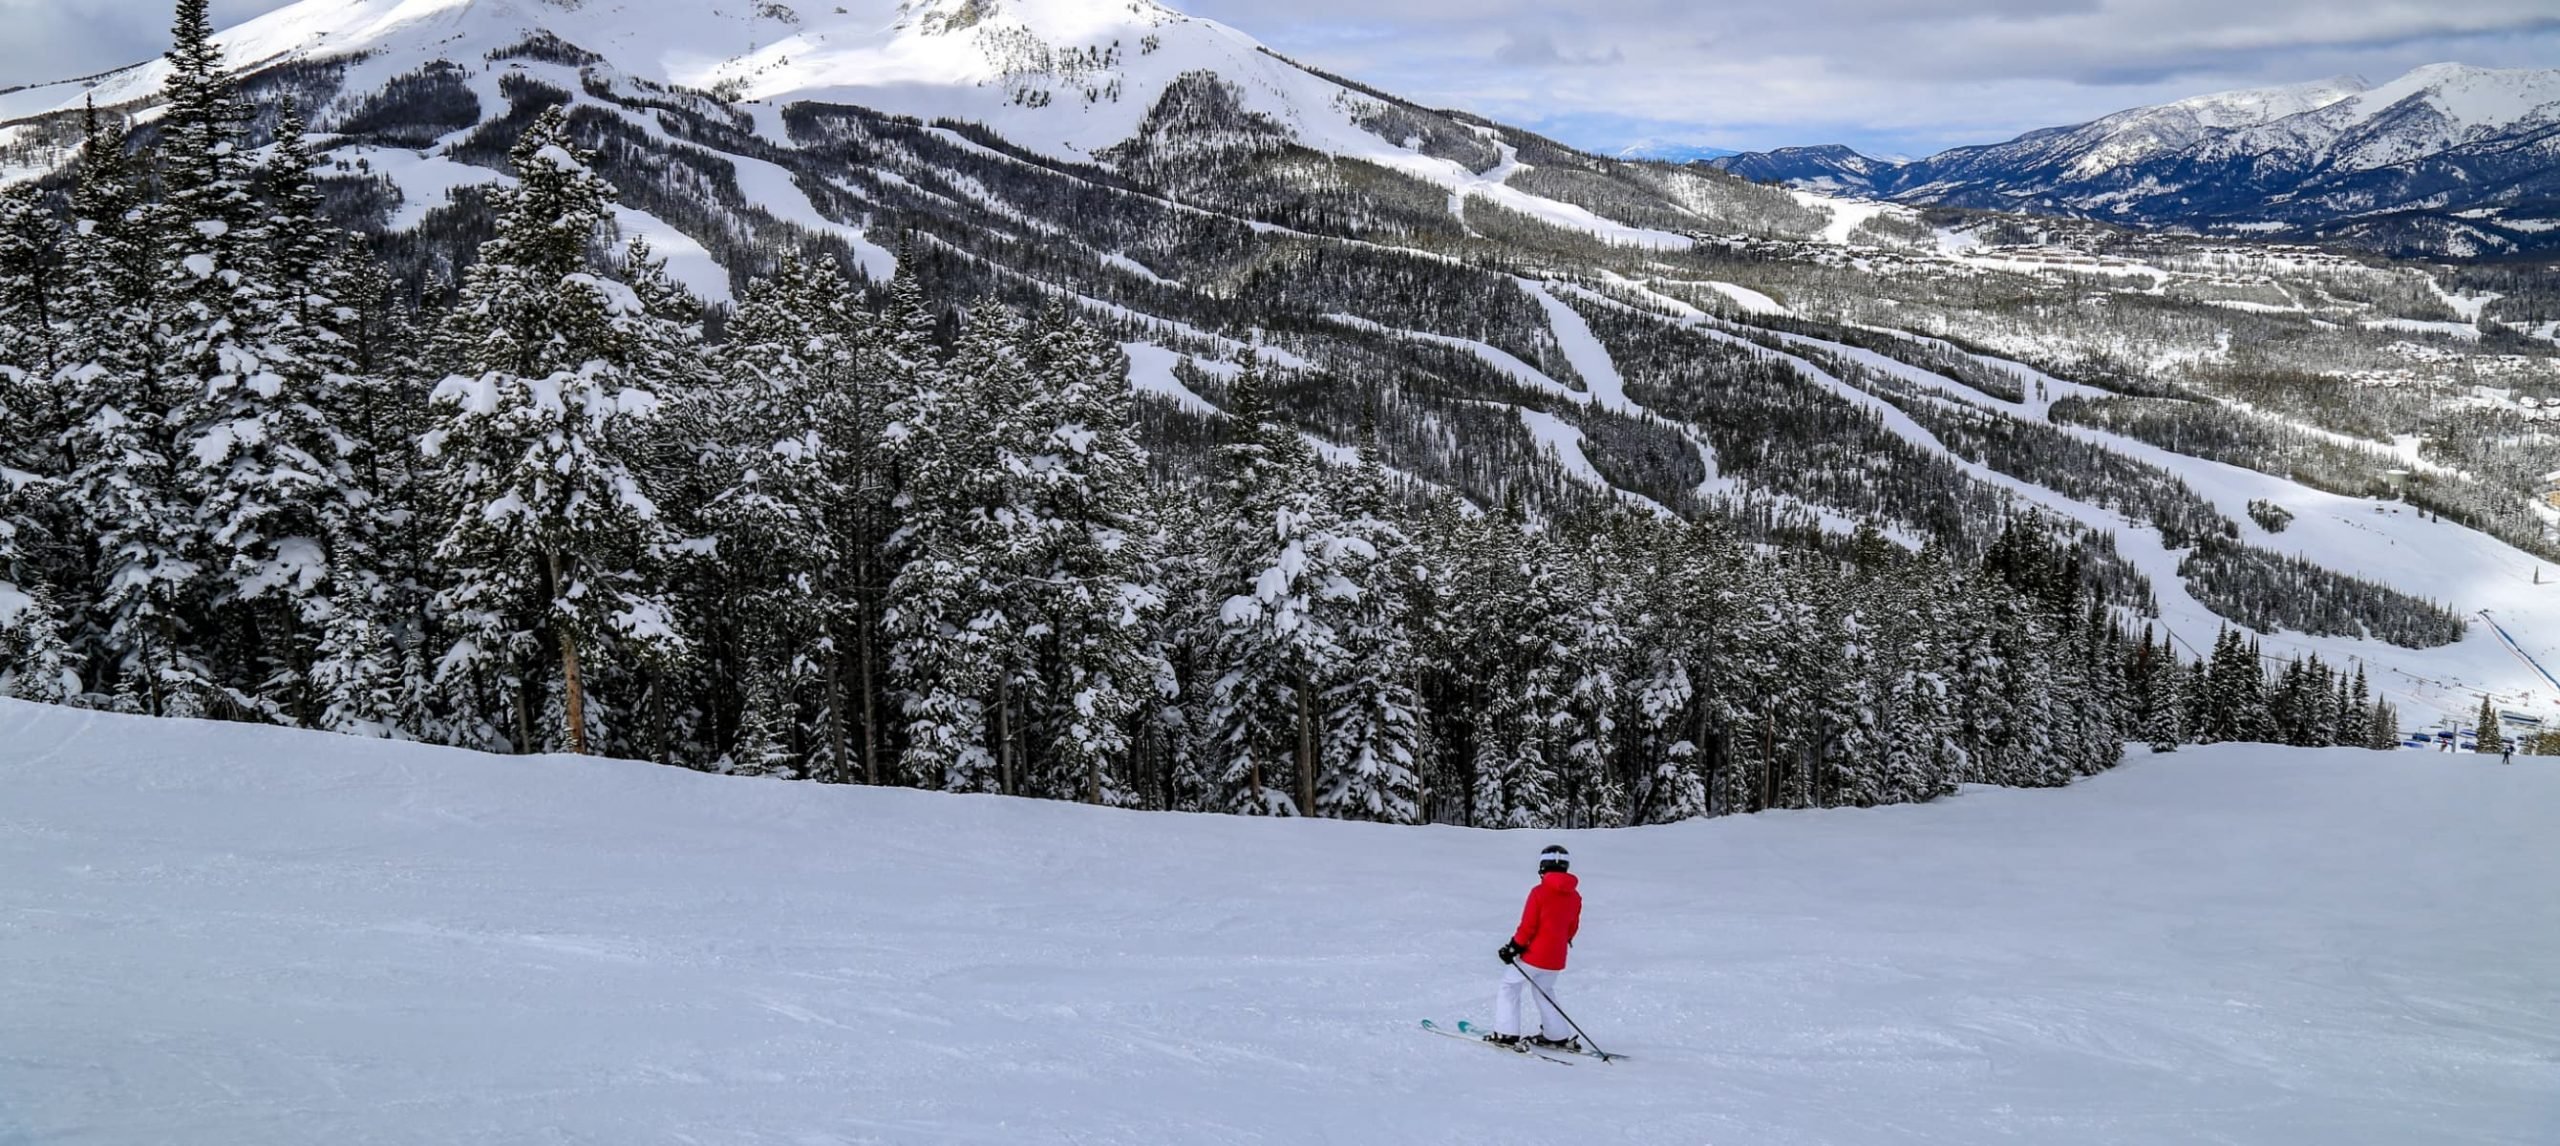 The 7 Best Ski Resorts In The U.S.